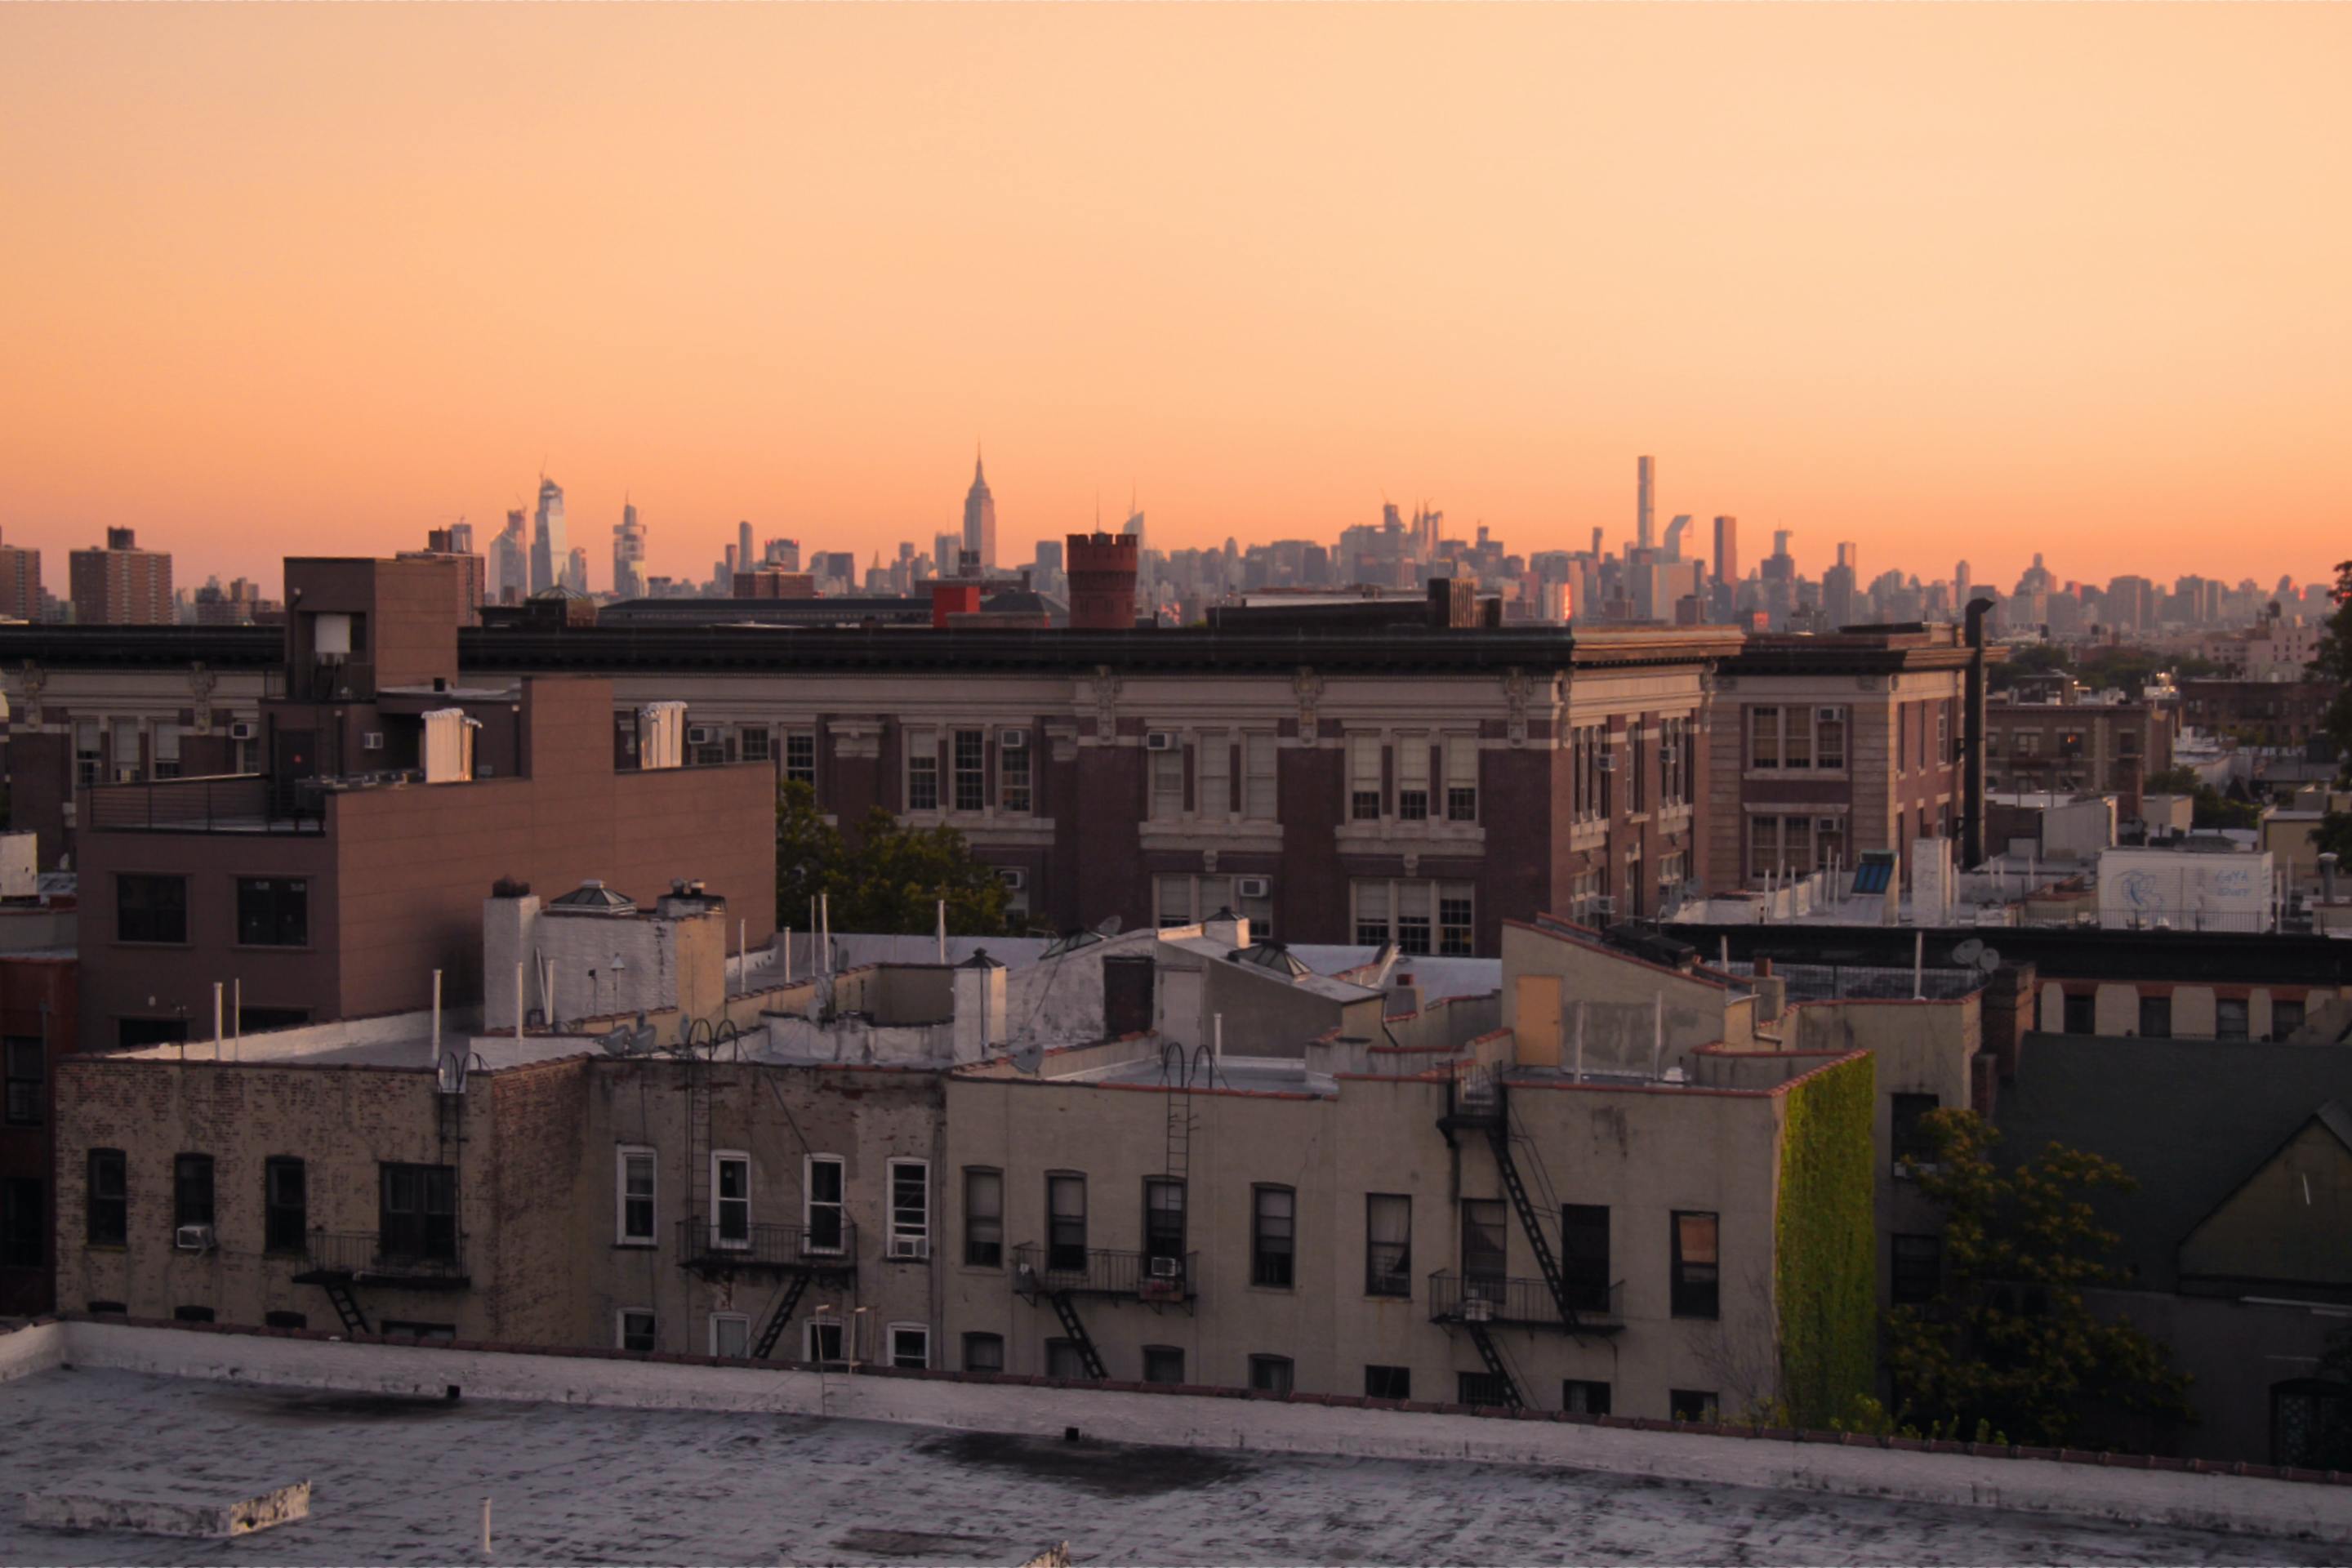 Sunrise over New York City tenements in Brooklyn, looking towards the Manhattan skyline